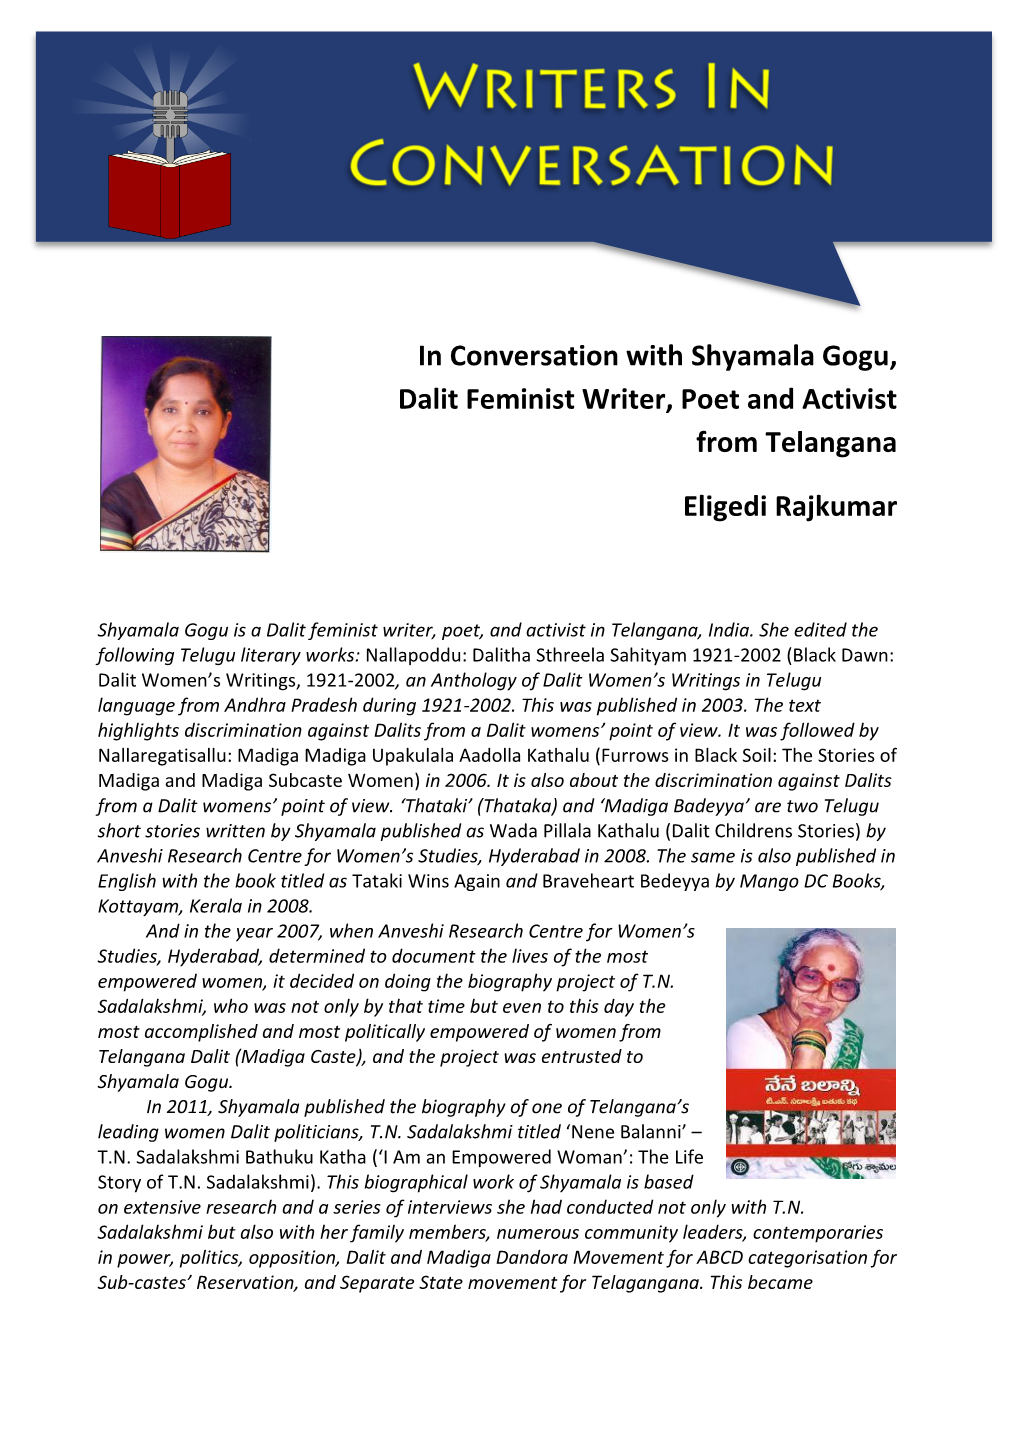 In Conversation with Shyamala Gogu, Dalit Feminist Writer, Poet and Activist from Telangana